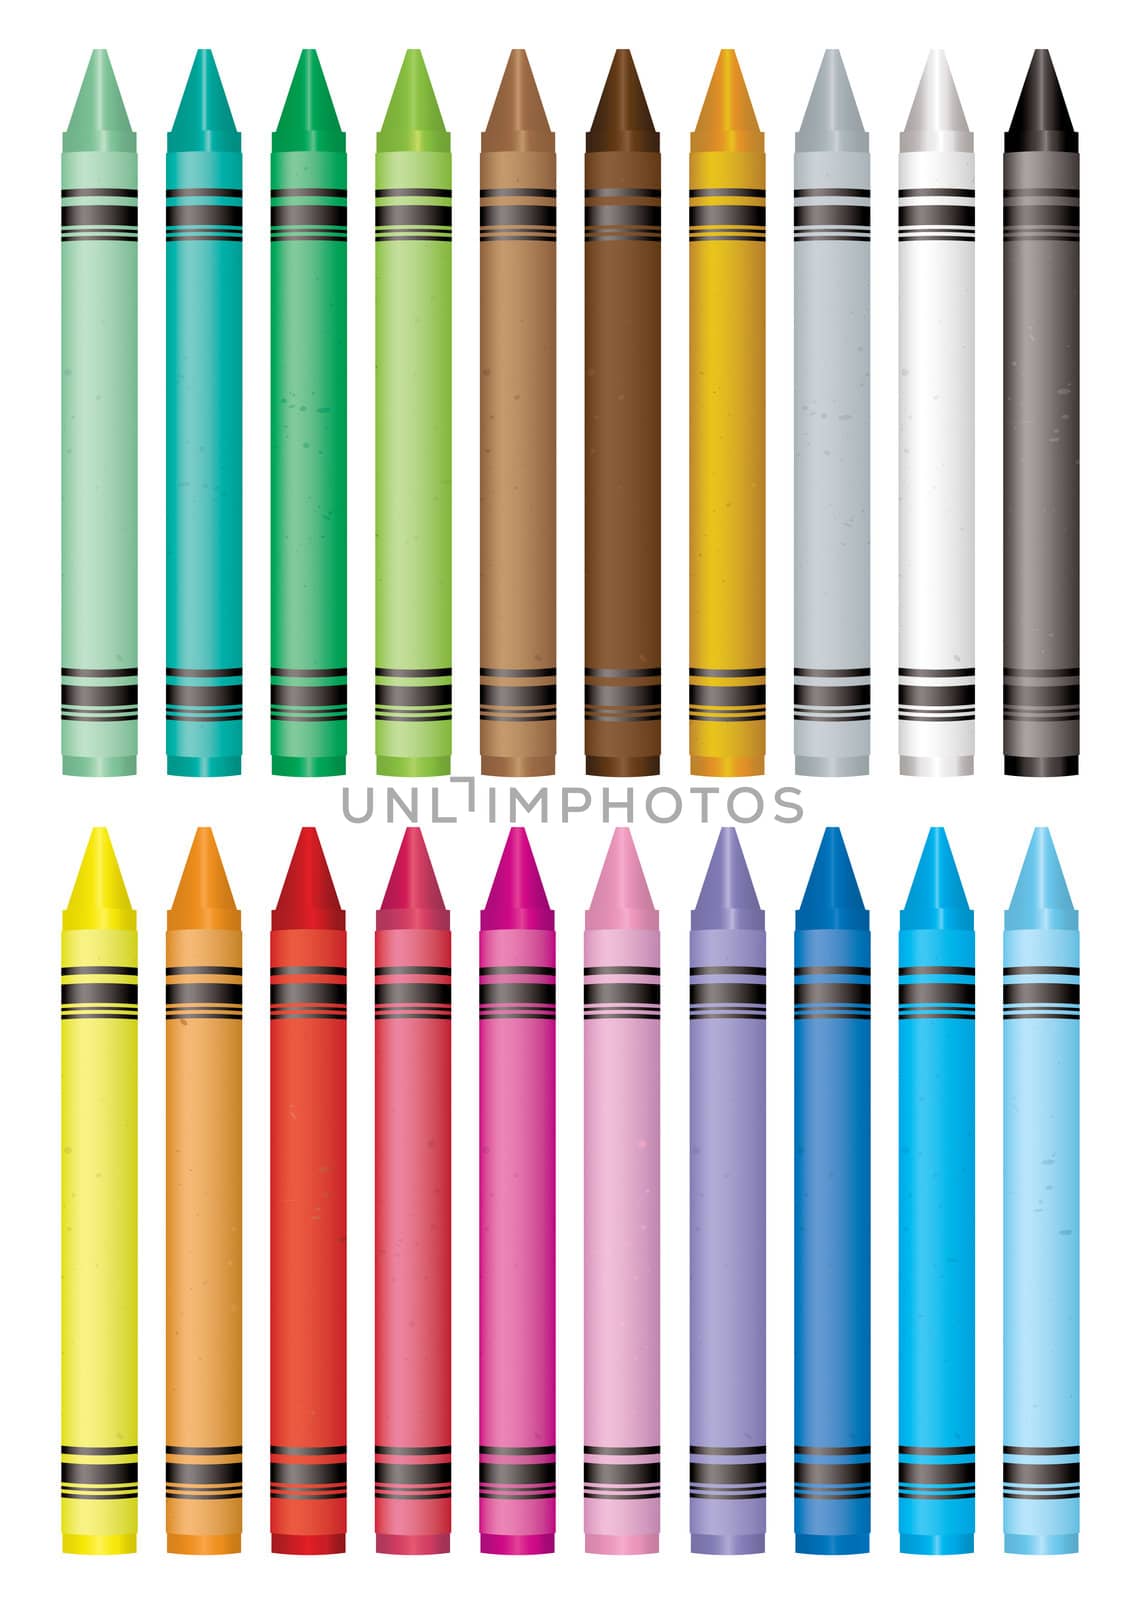 crayon selection by nicemonkey